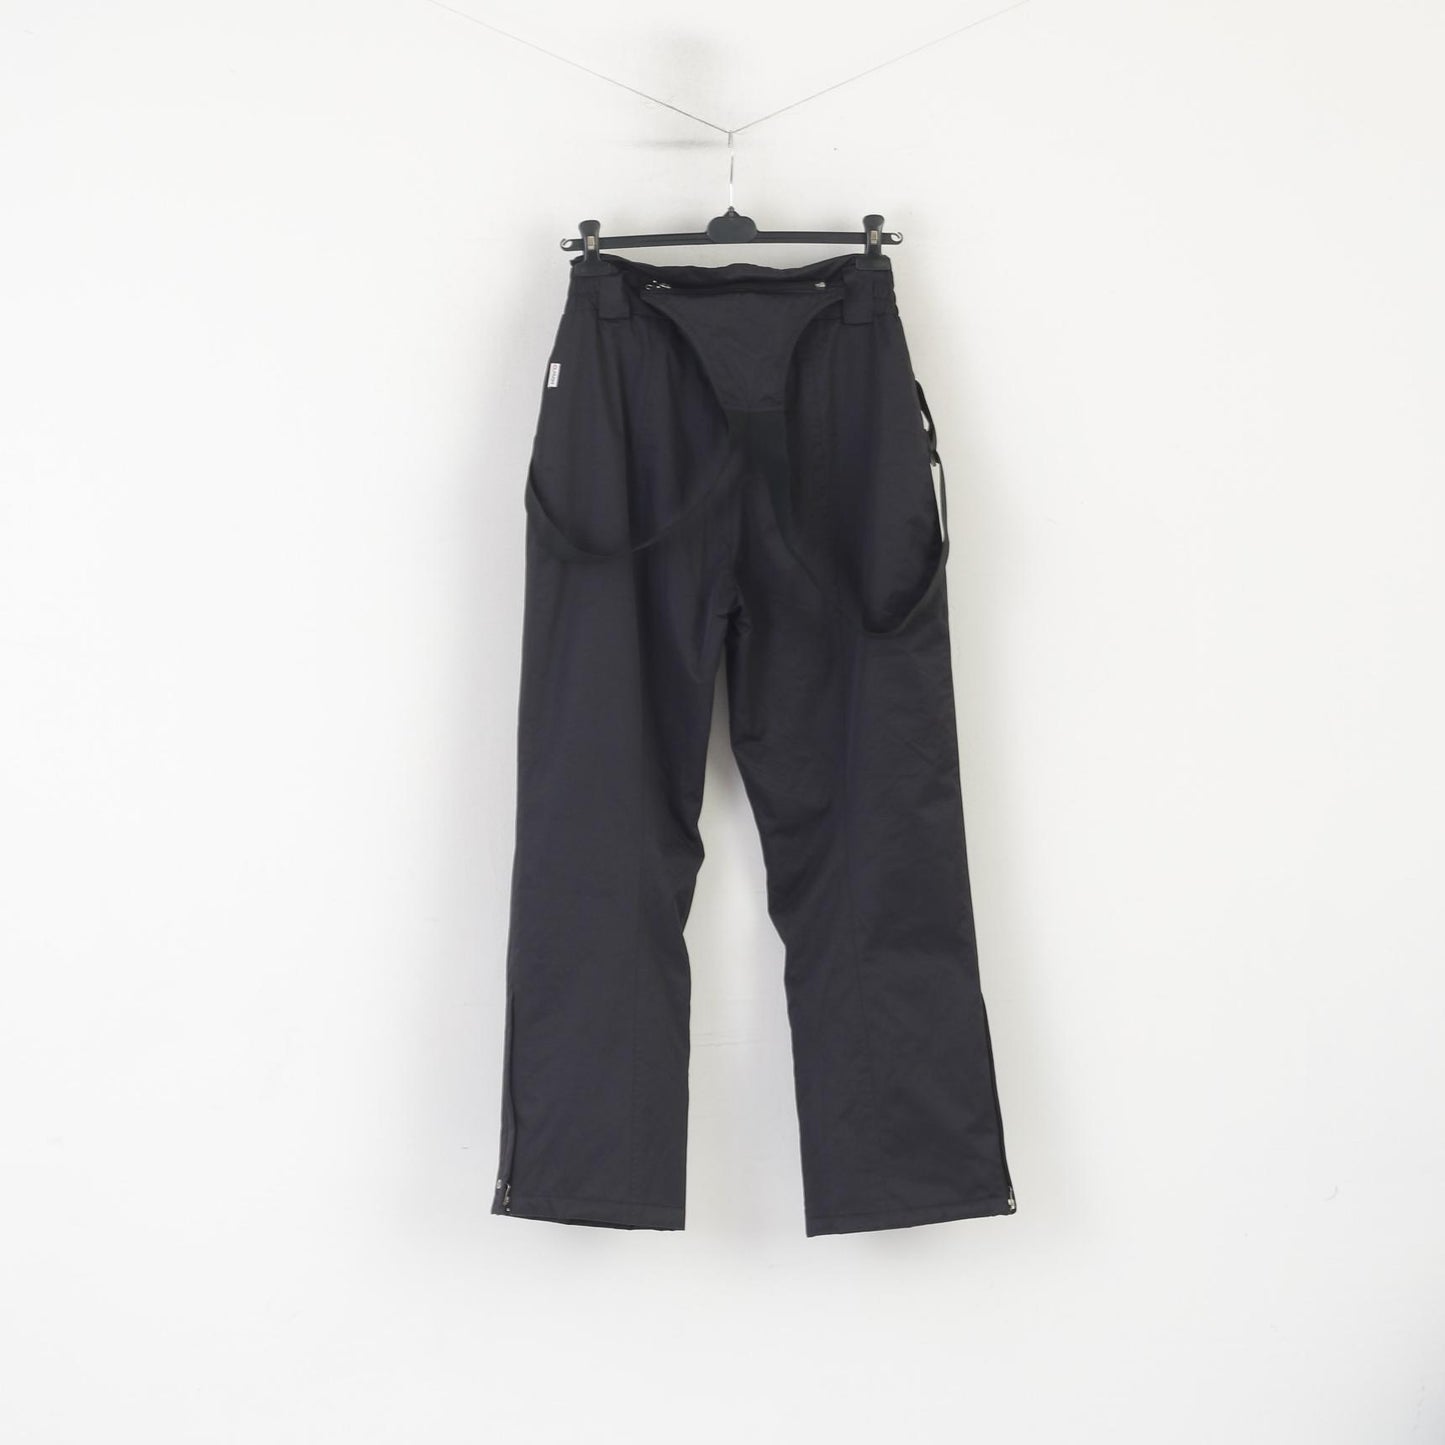 New Etirel Women 18 XL Ski Trousers Black  Dry Plus Nylon Salopette Snow Pants